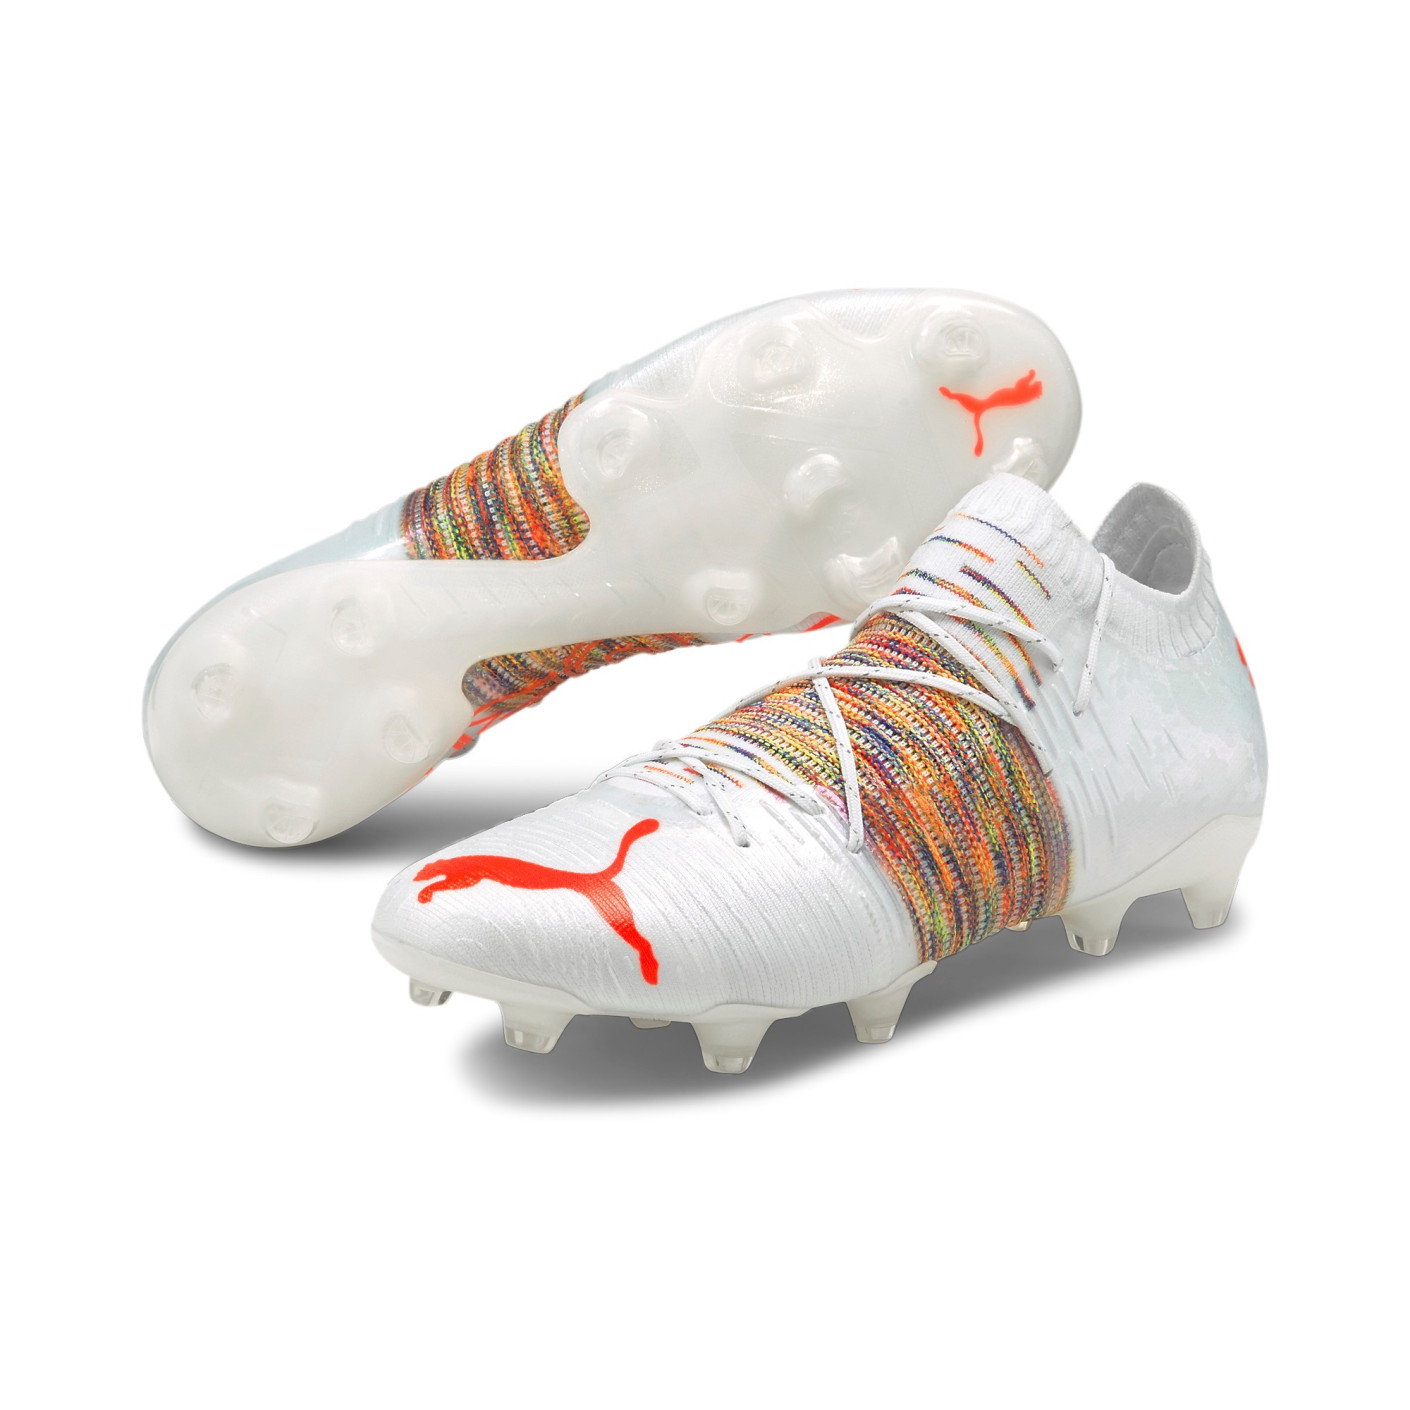 PUMA FUTURE Z 1.1 Gazon Naturel Gazon Artificiel Chaussures de Foot (MG) Blanc Rouge